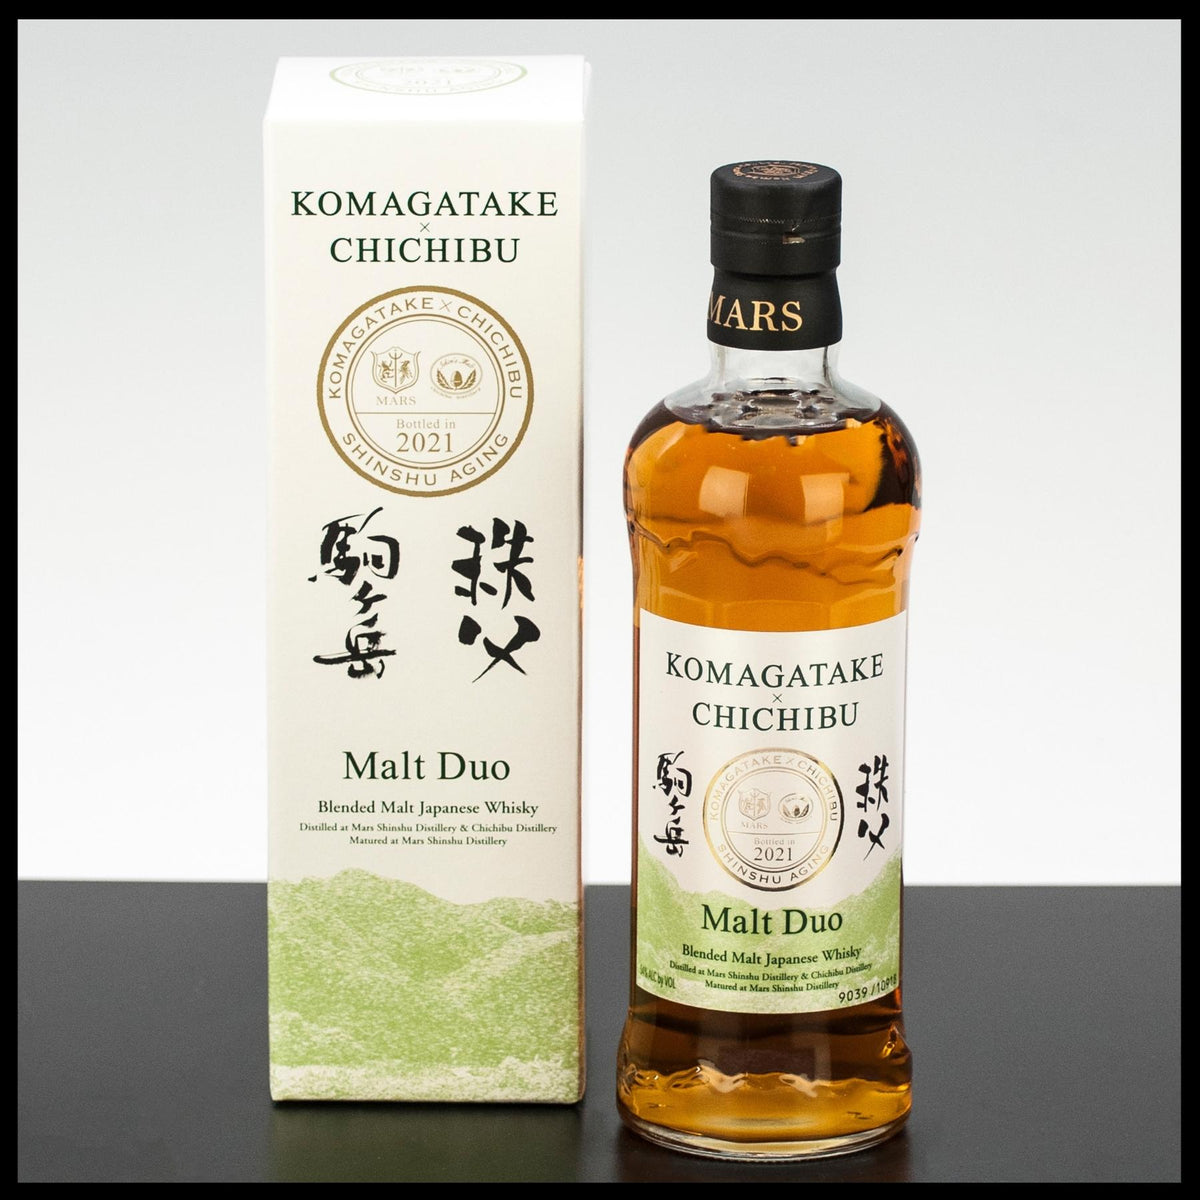 Mars Komagatake x Chichibu Malt Duo Blended Malt Whisky 2021 0,7L - 53,5% Vol. - Trinklusiv